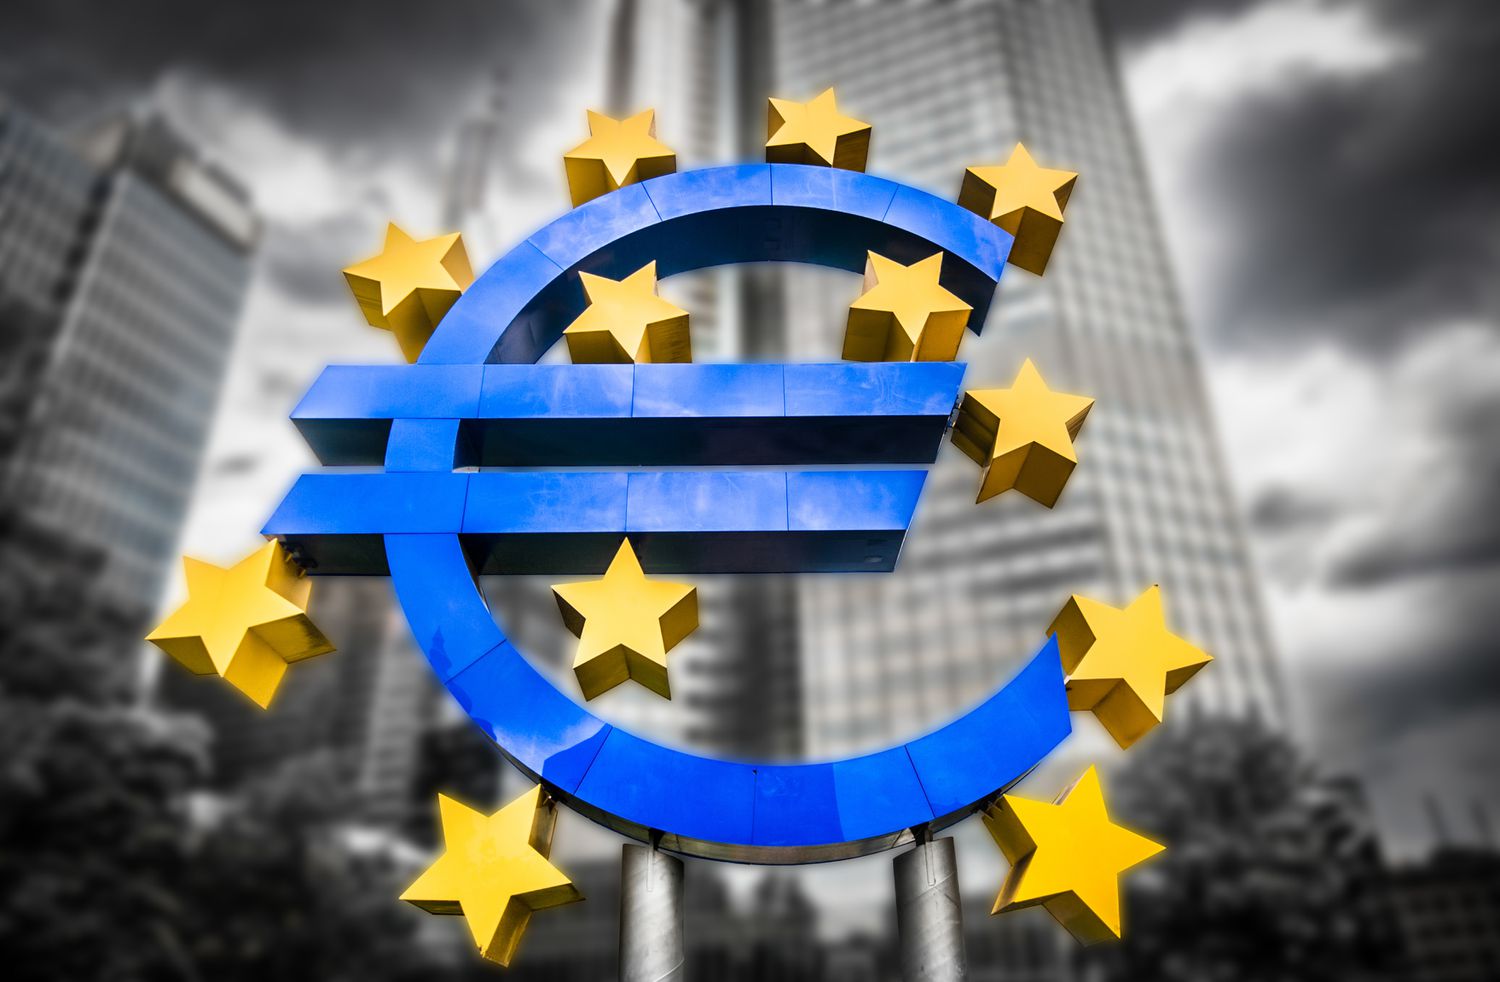 European legislators to deliberate on Digital Euro in May 2023